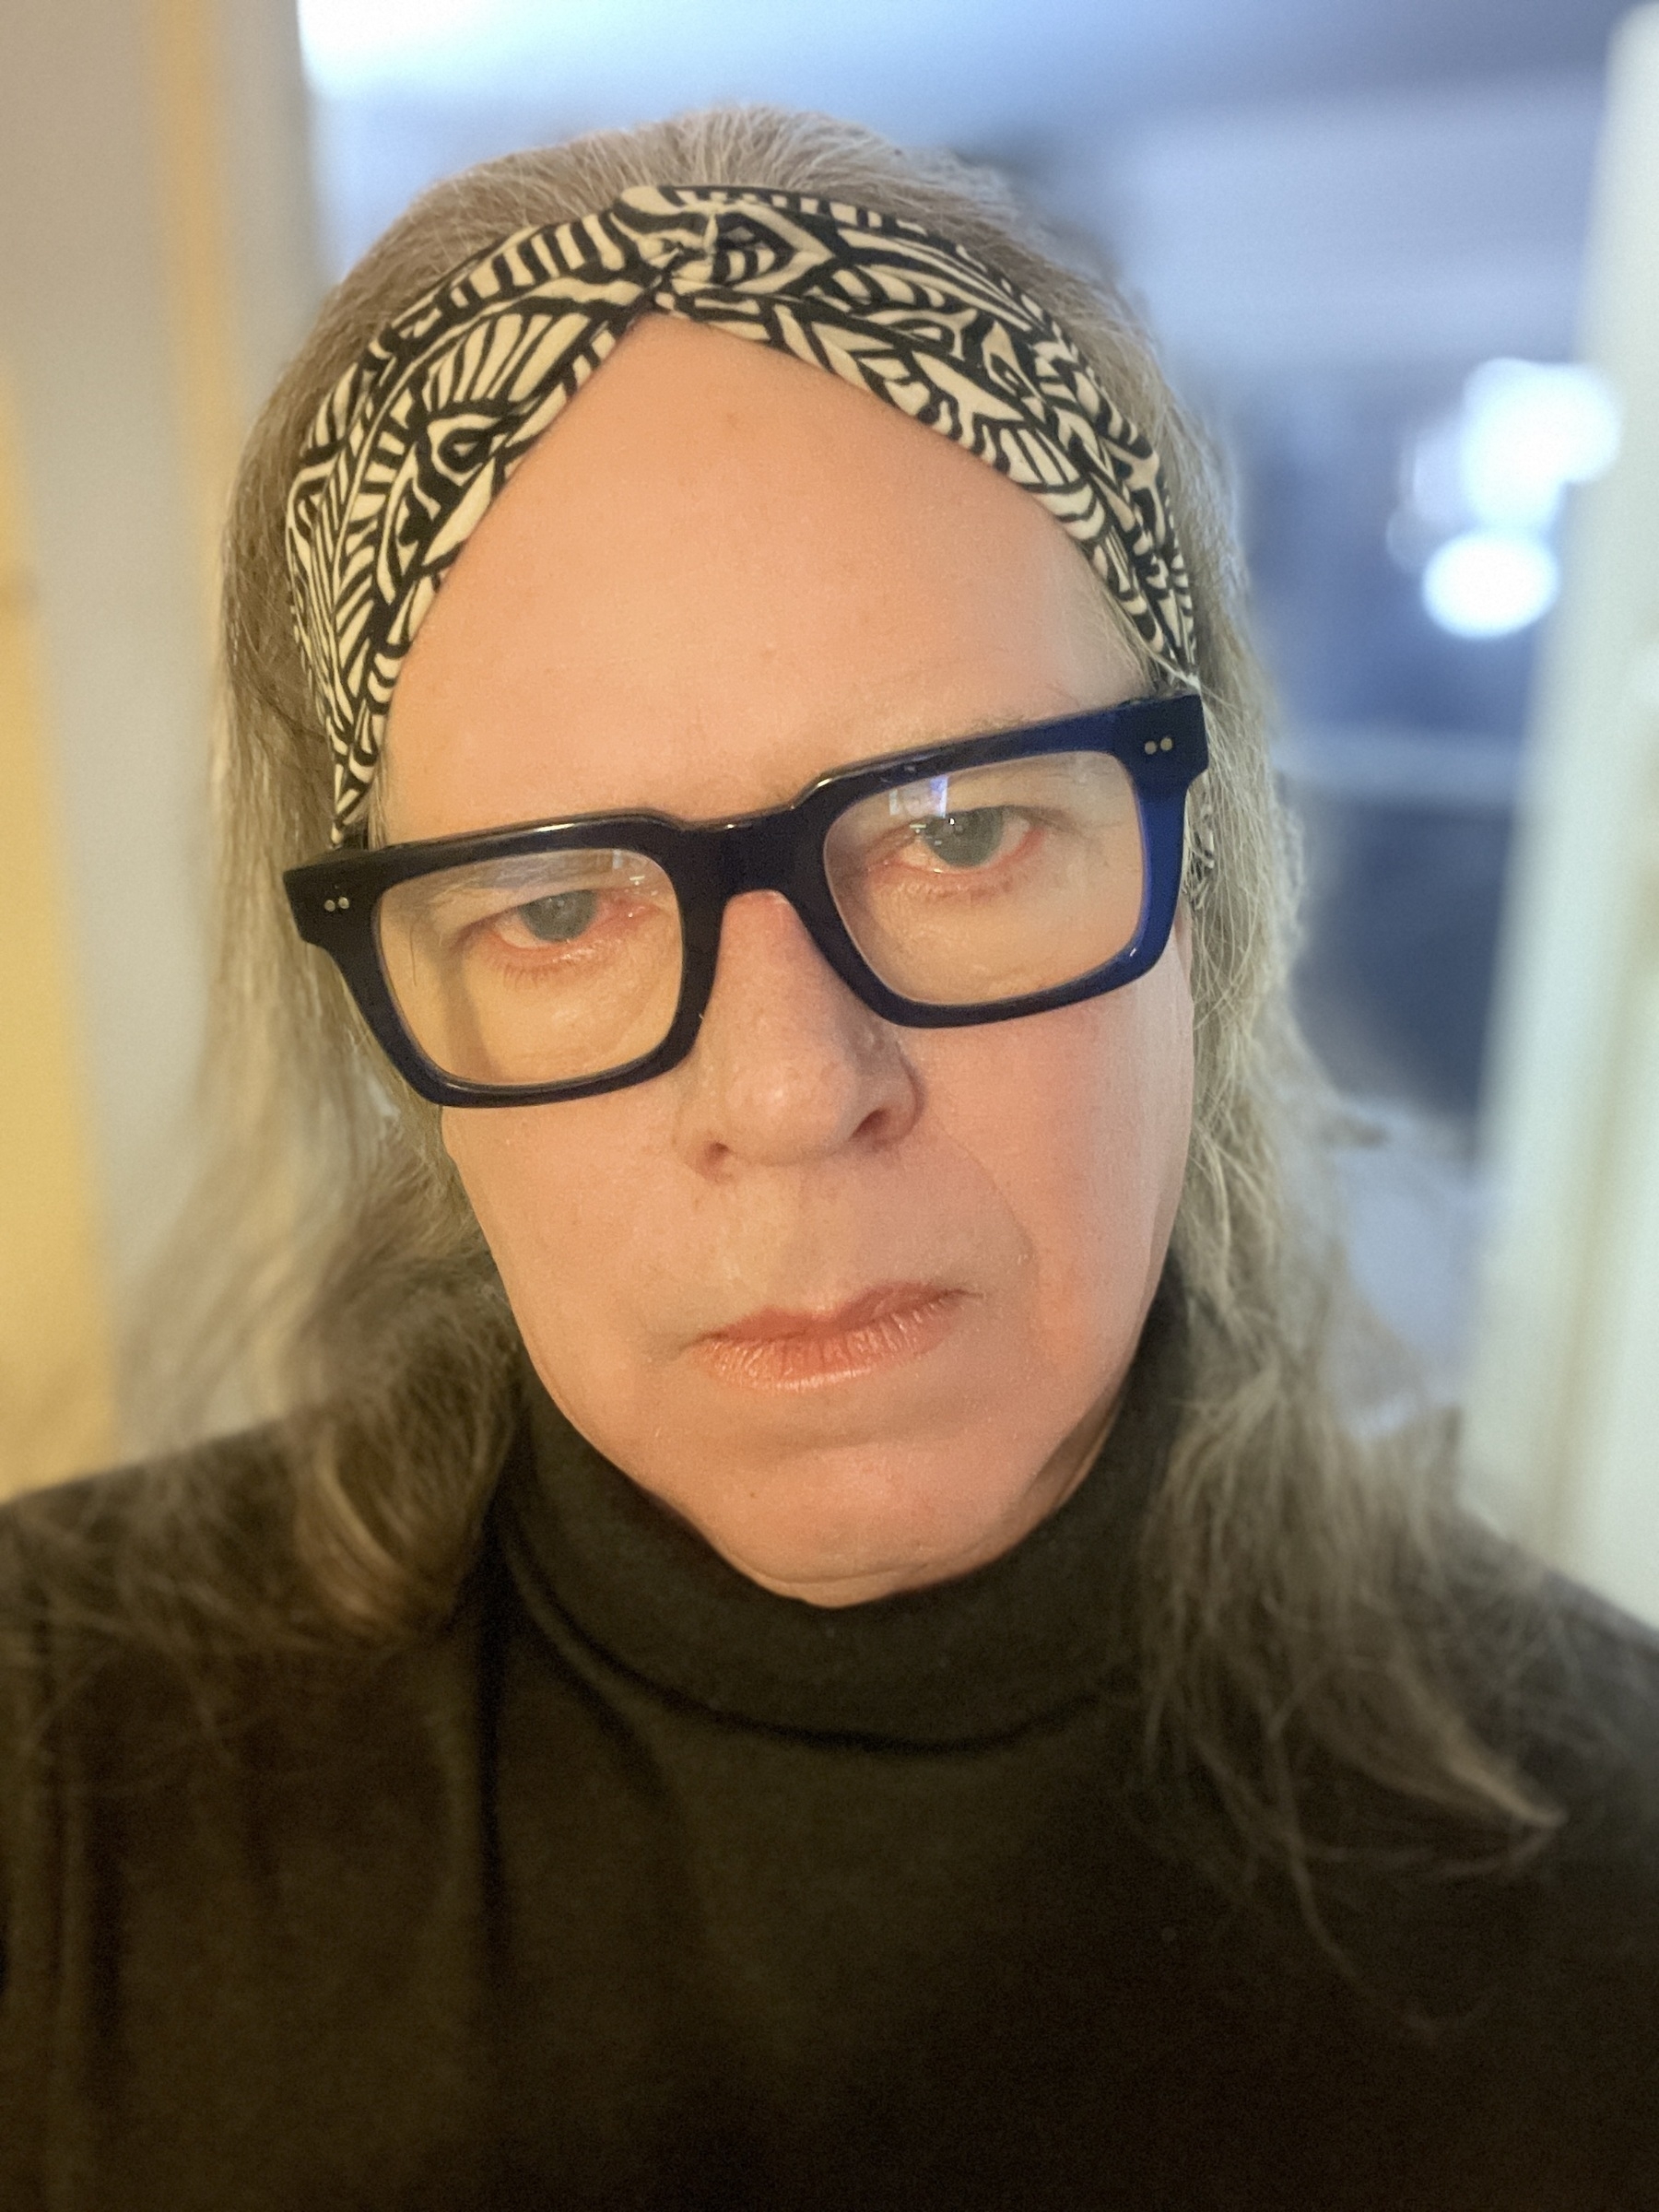 Head shot of trans-feminine person wearing thick framed, dark blue glasses, batik print headband and gray turtleneck shirt. Hair is shoulder length. Her expression is one of slight irritation.